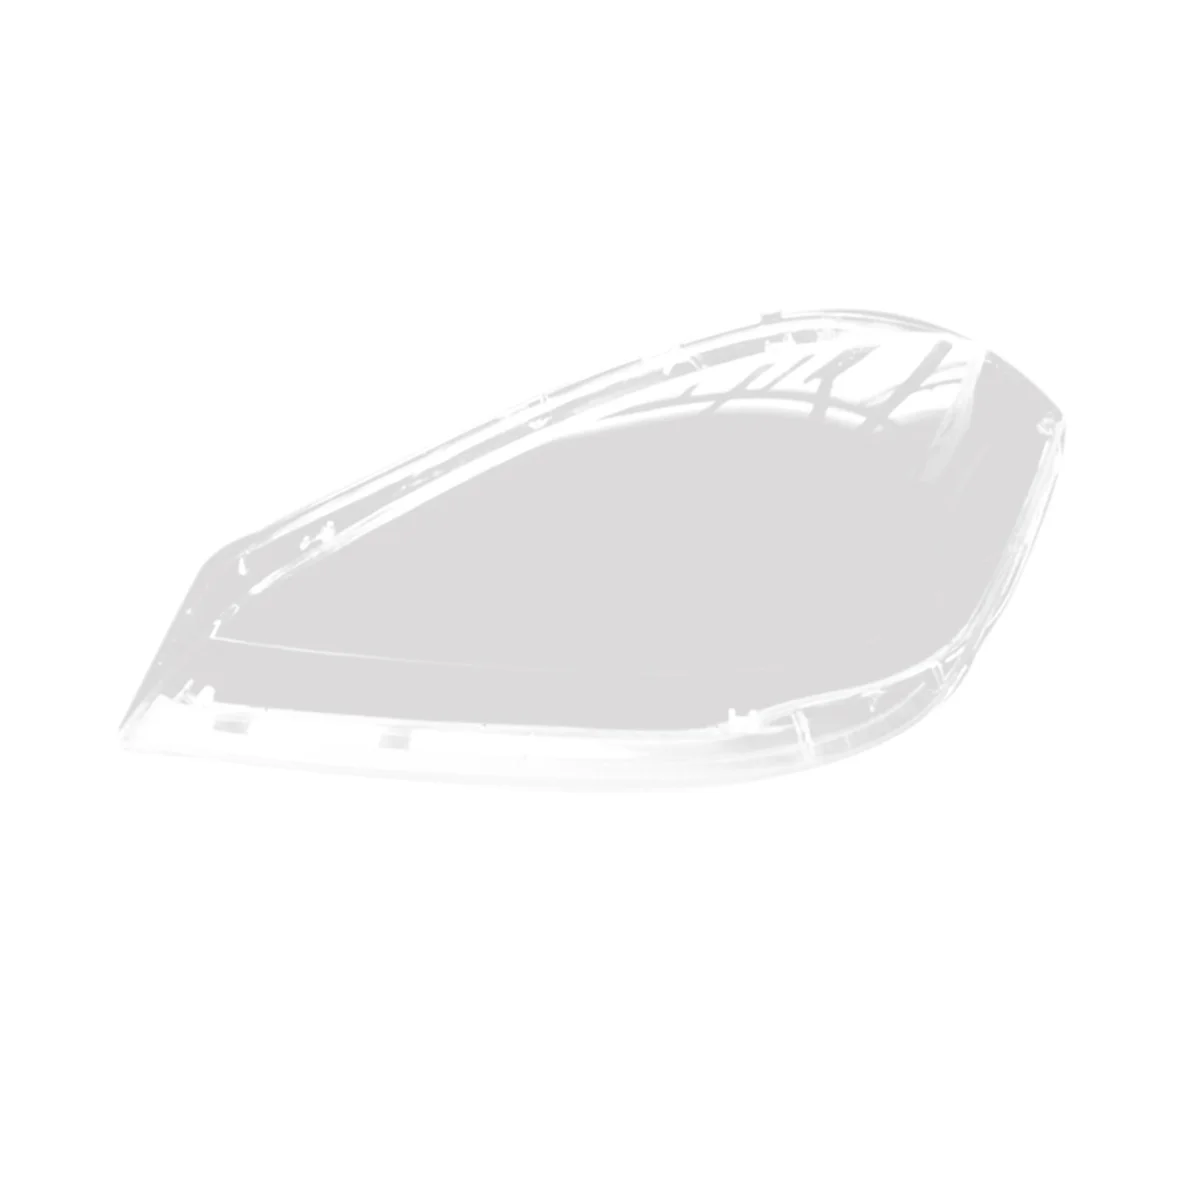 

Car Left Headlight Shell Lamp Shade Transparent Lens Cover Headlight Cover for Mercedes-Benz a Class W169 2009-2011